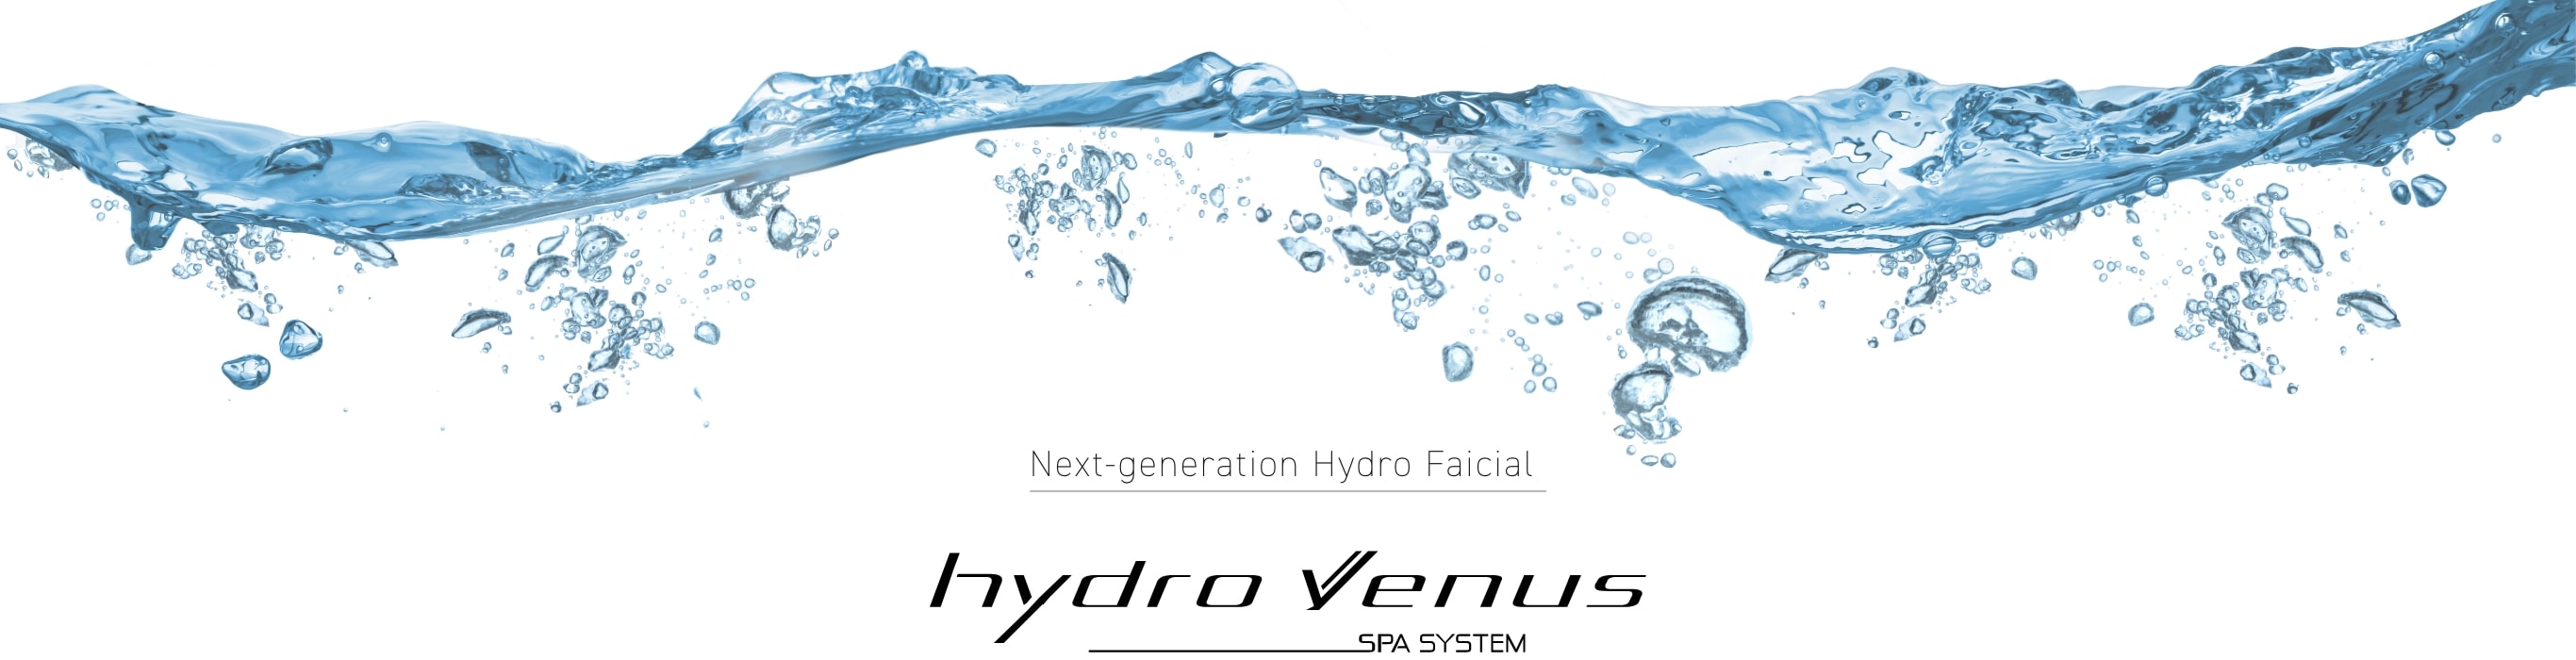 Next-generation Hydro Faicial